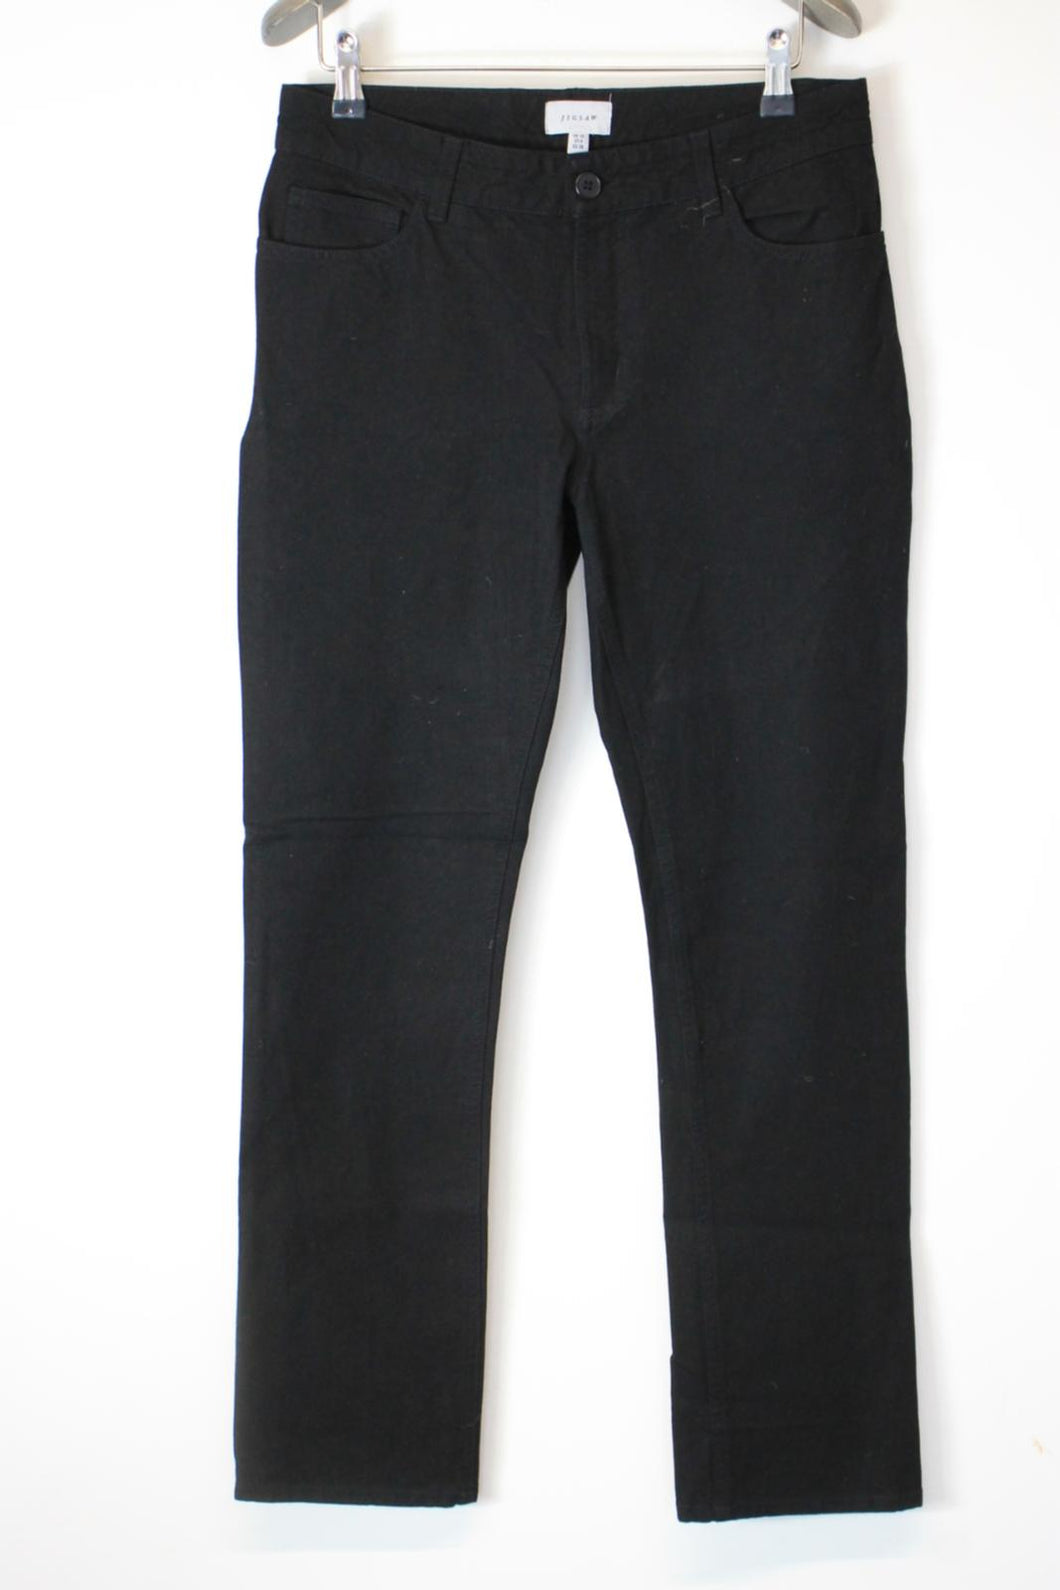 JIGSAW Ladies Black Cotton Blend Richmond Skinny Jeans EU38 UK10